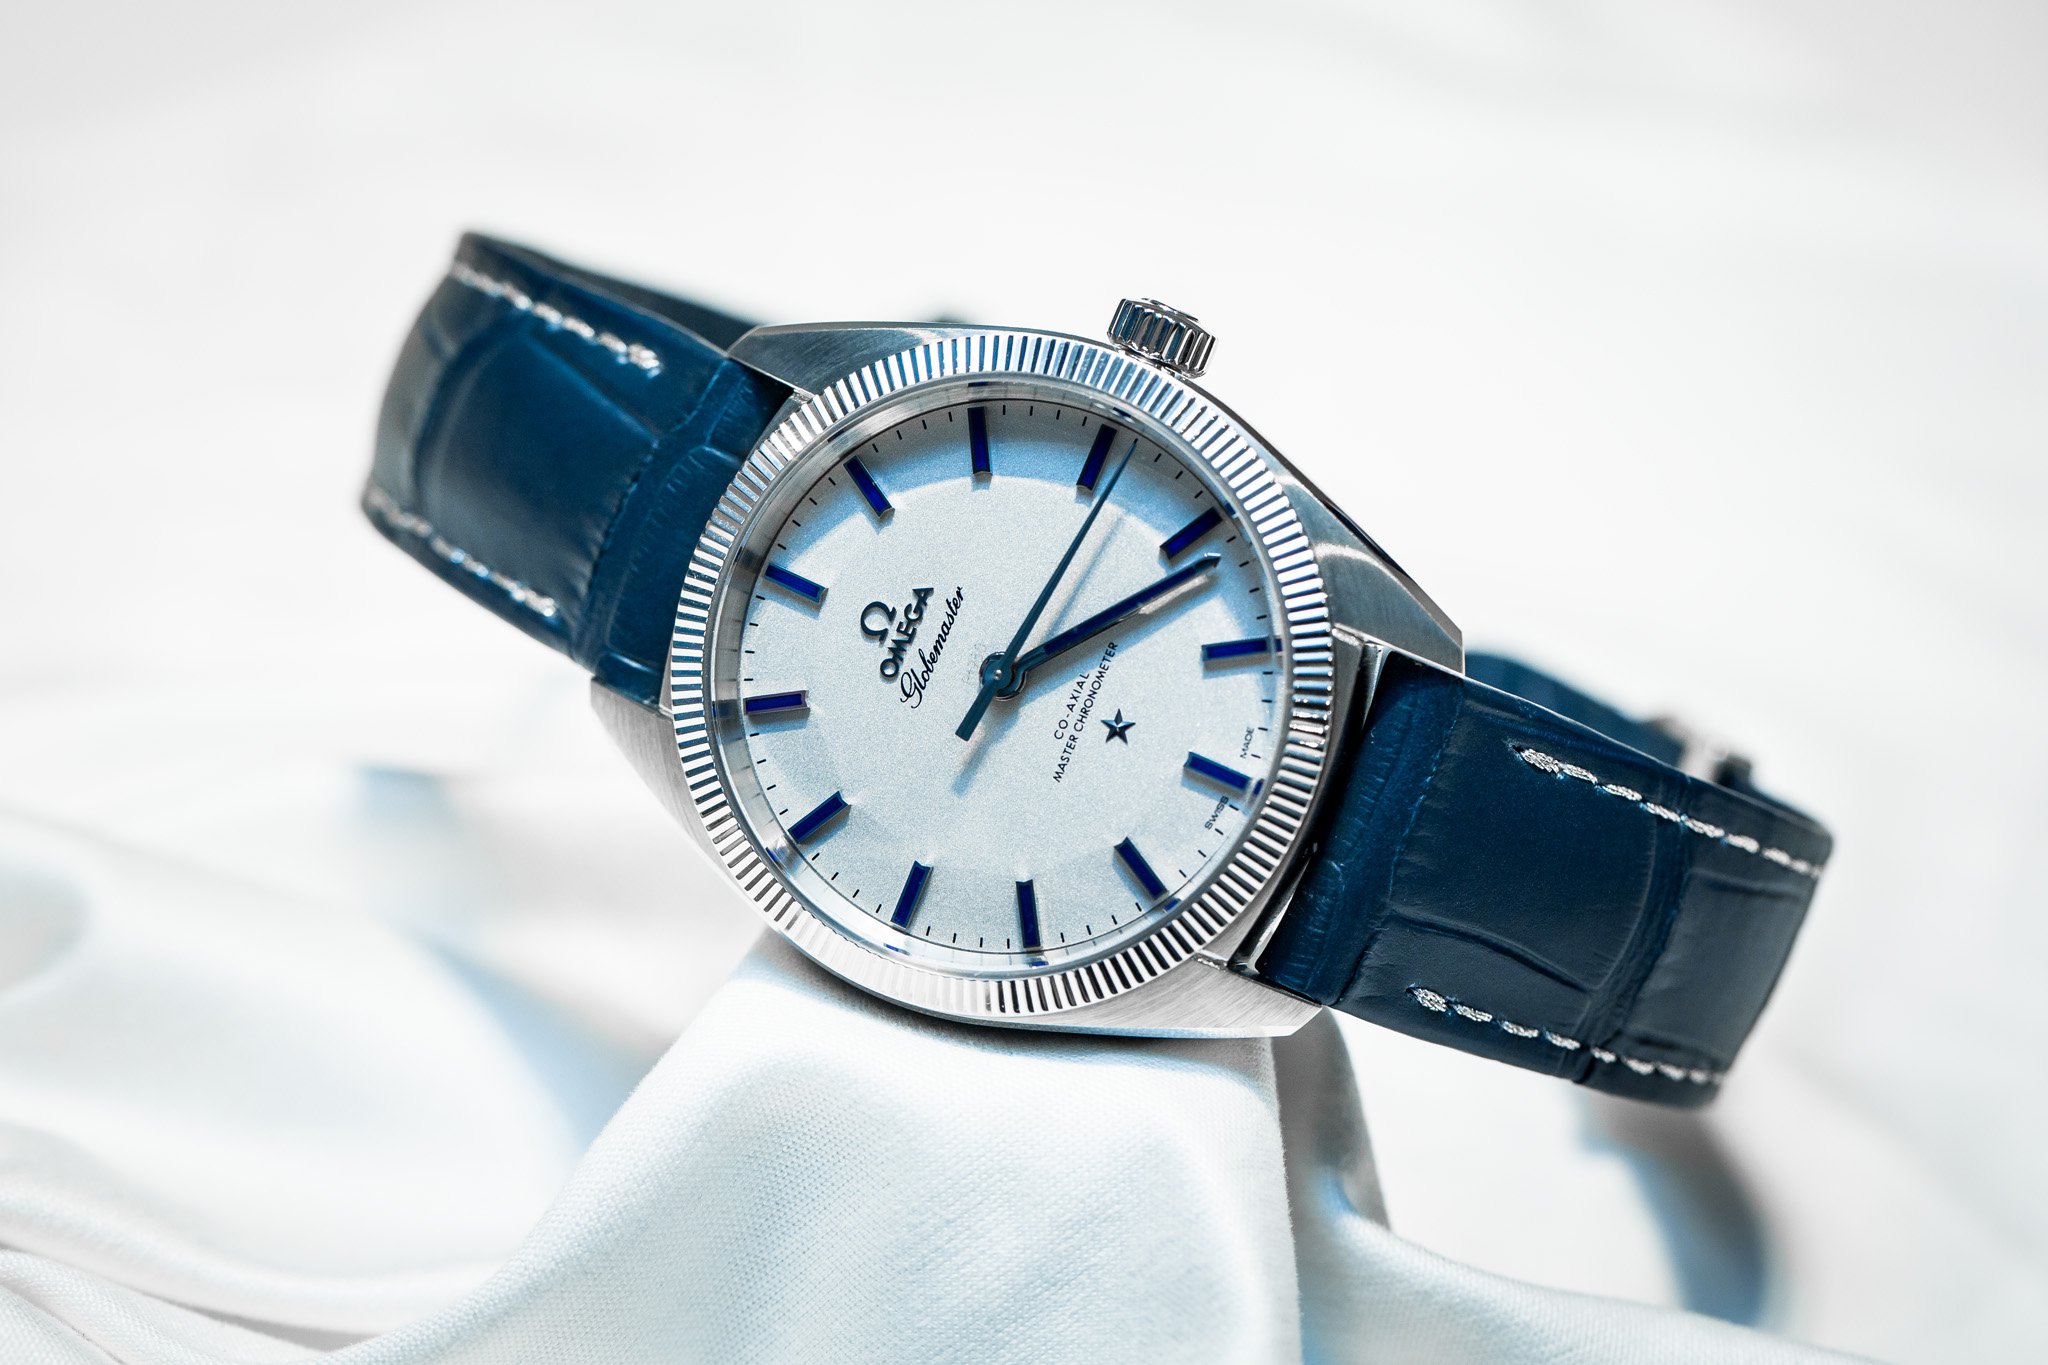 Omega Globemaster 2015 Blue Watch Baselworld